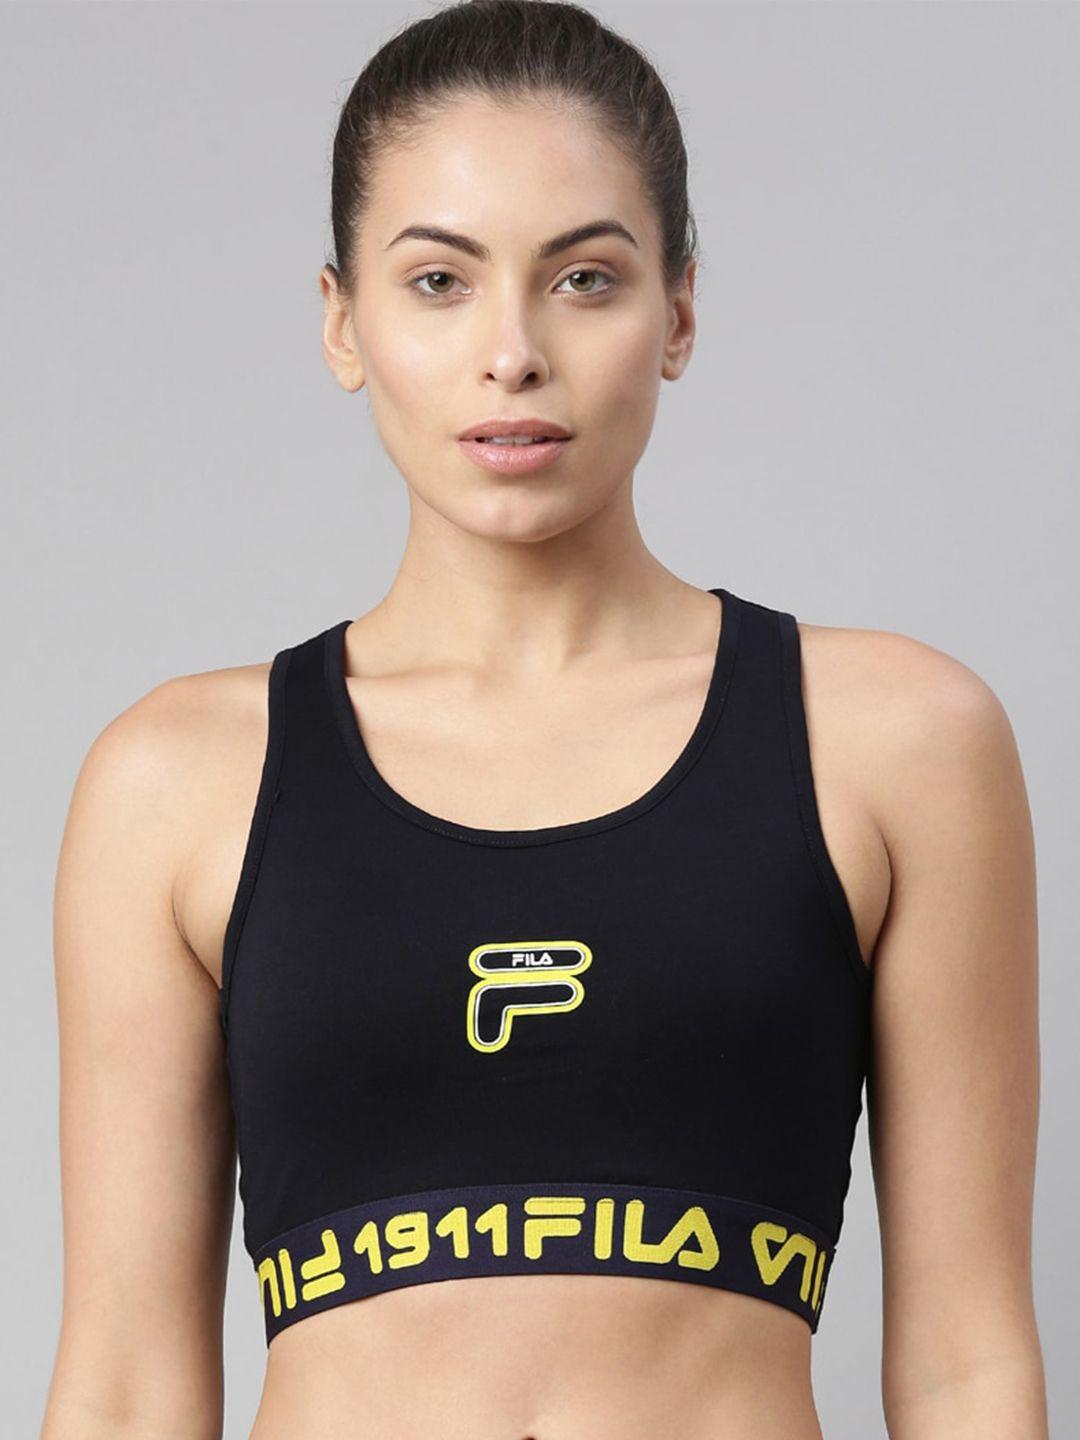 fila-black-&-yellow-printed-workout-bra---wireless